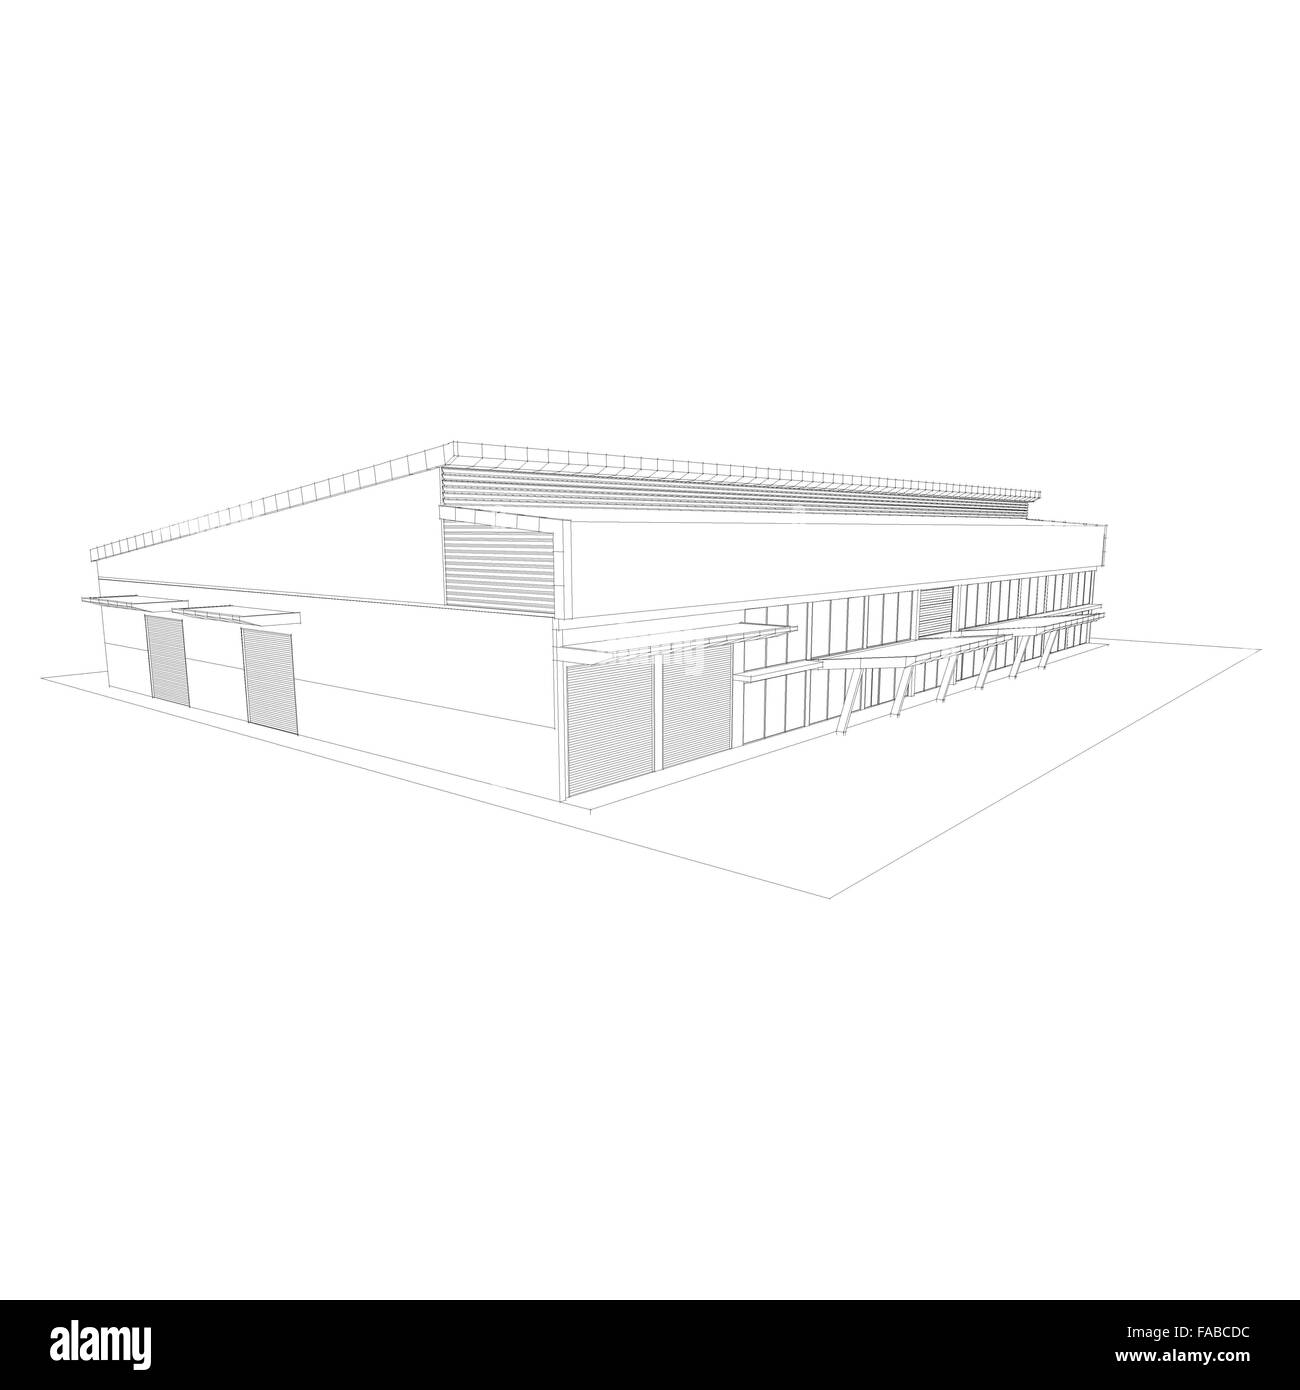 Le dessin architectural 3D Warehouse Photo Stock - Alamy